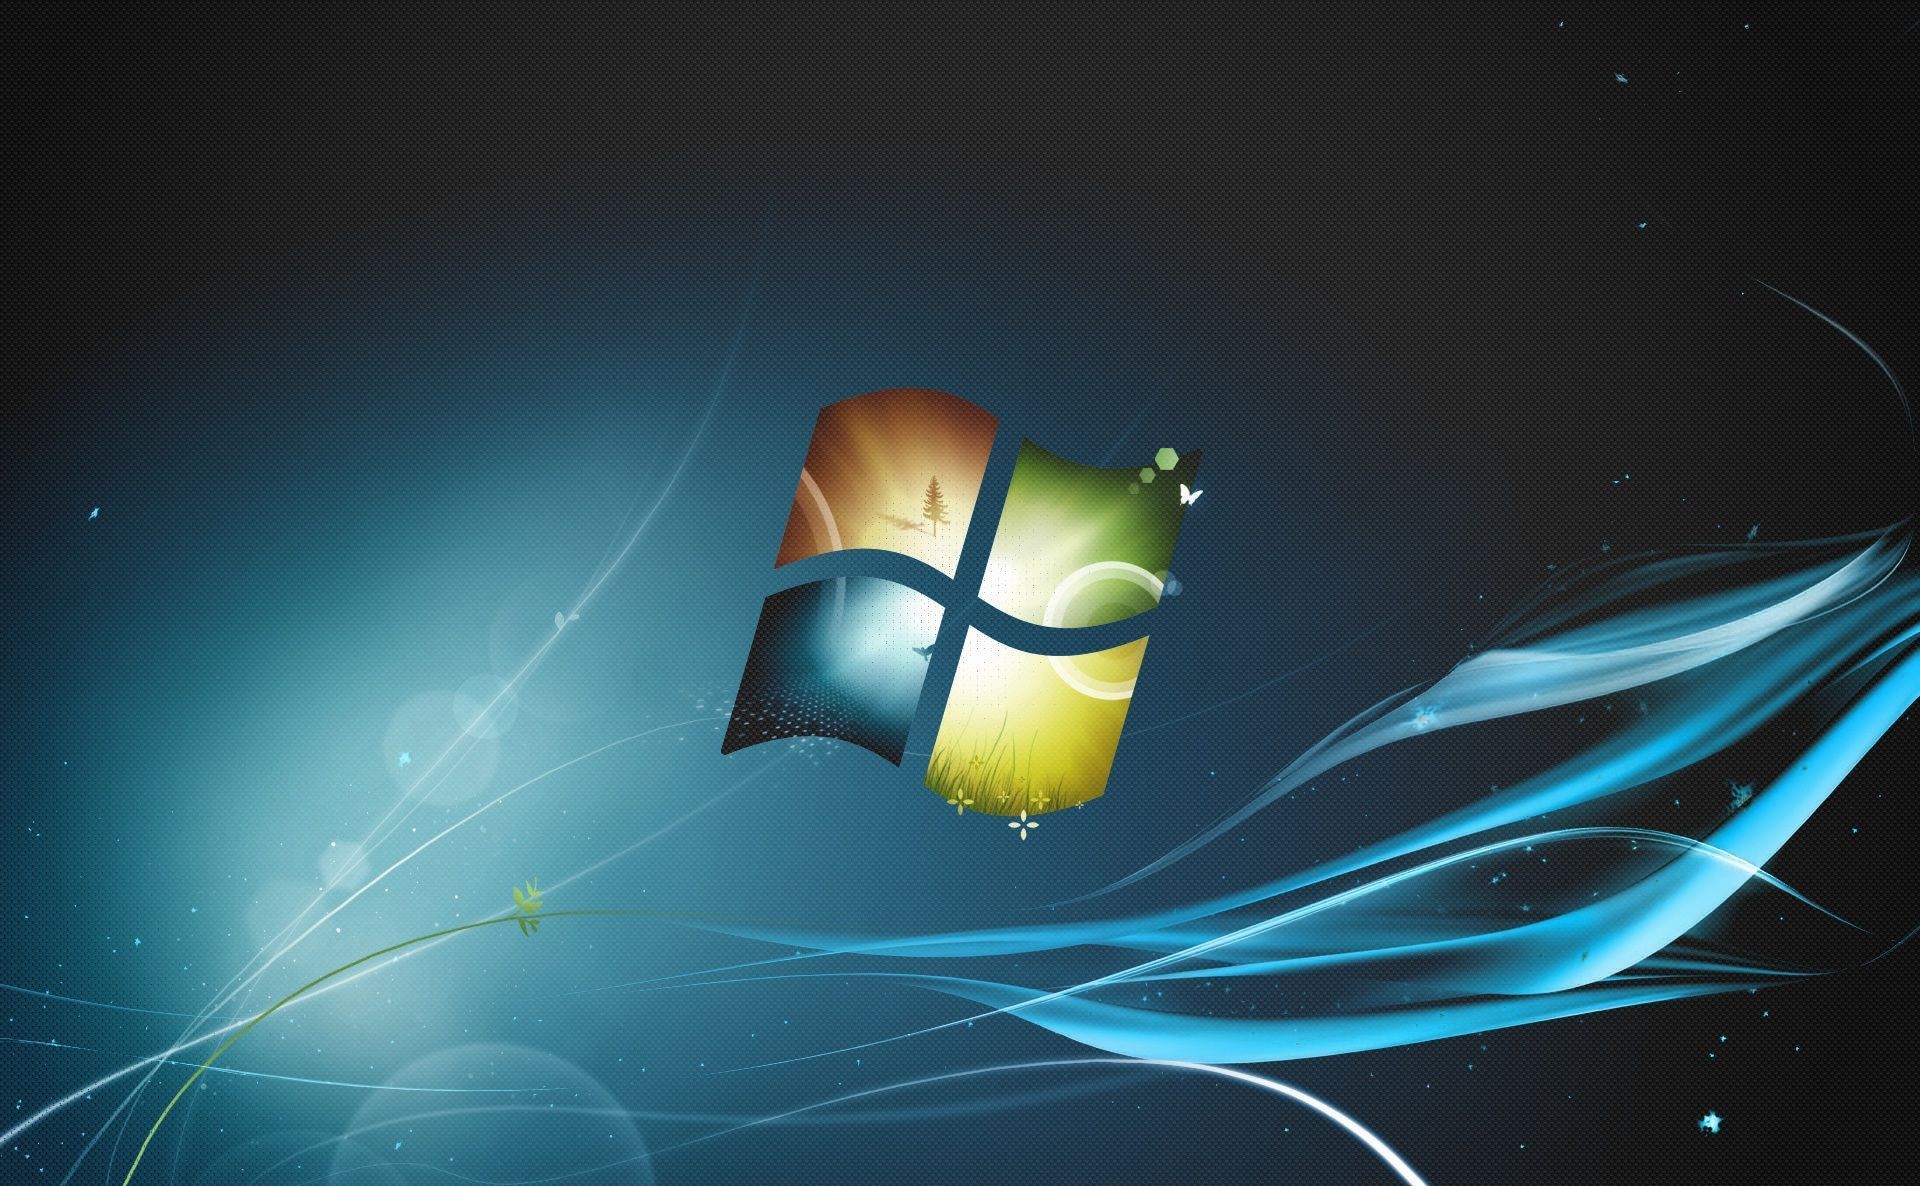 Latest Windows 7 Free HD Wallpapers | Download Free Desktop ...